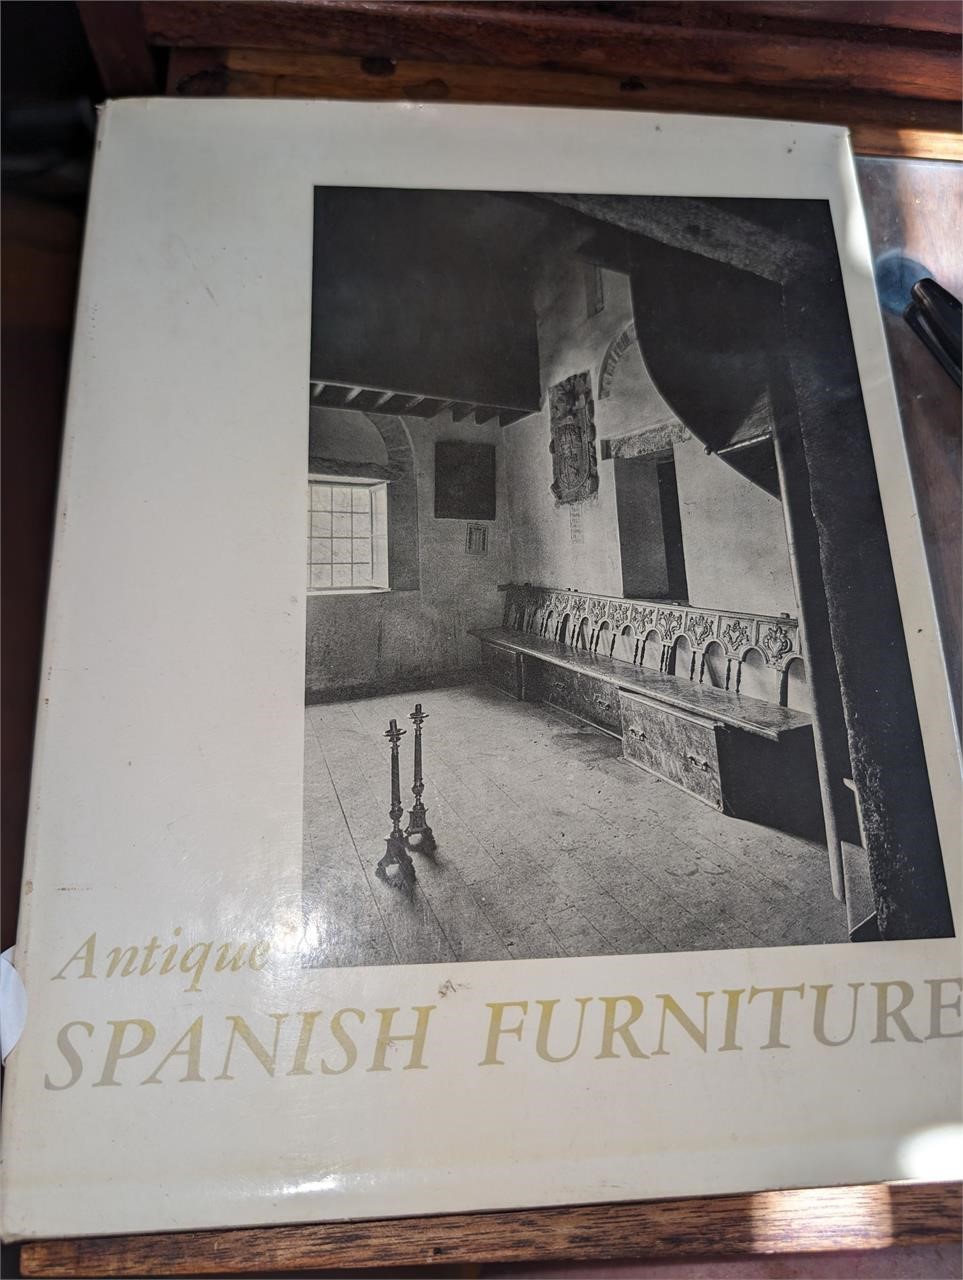 Antique Spanish Furniture by Perez Bueno